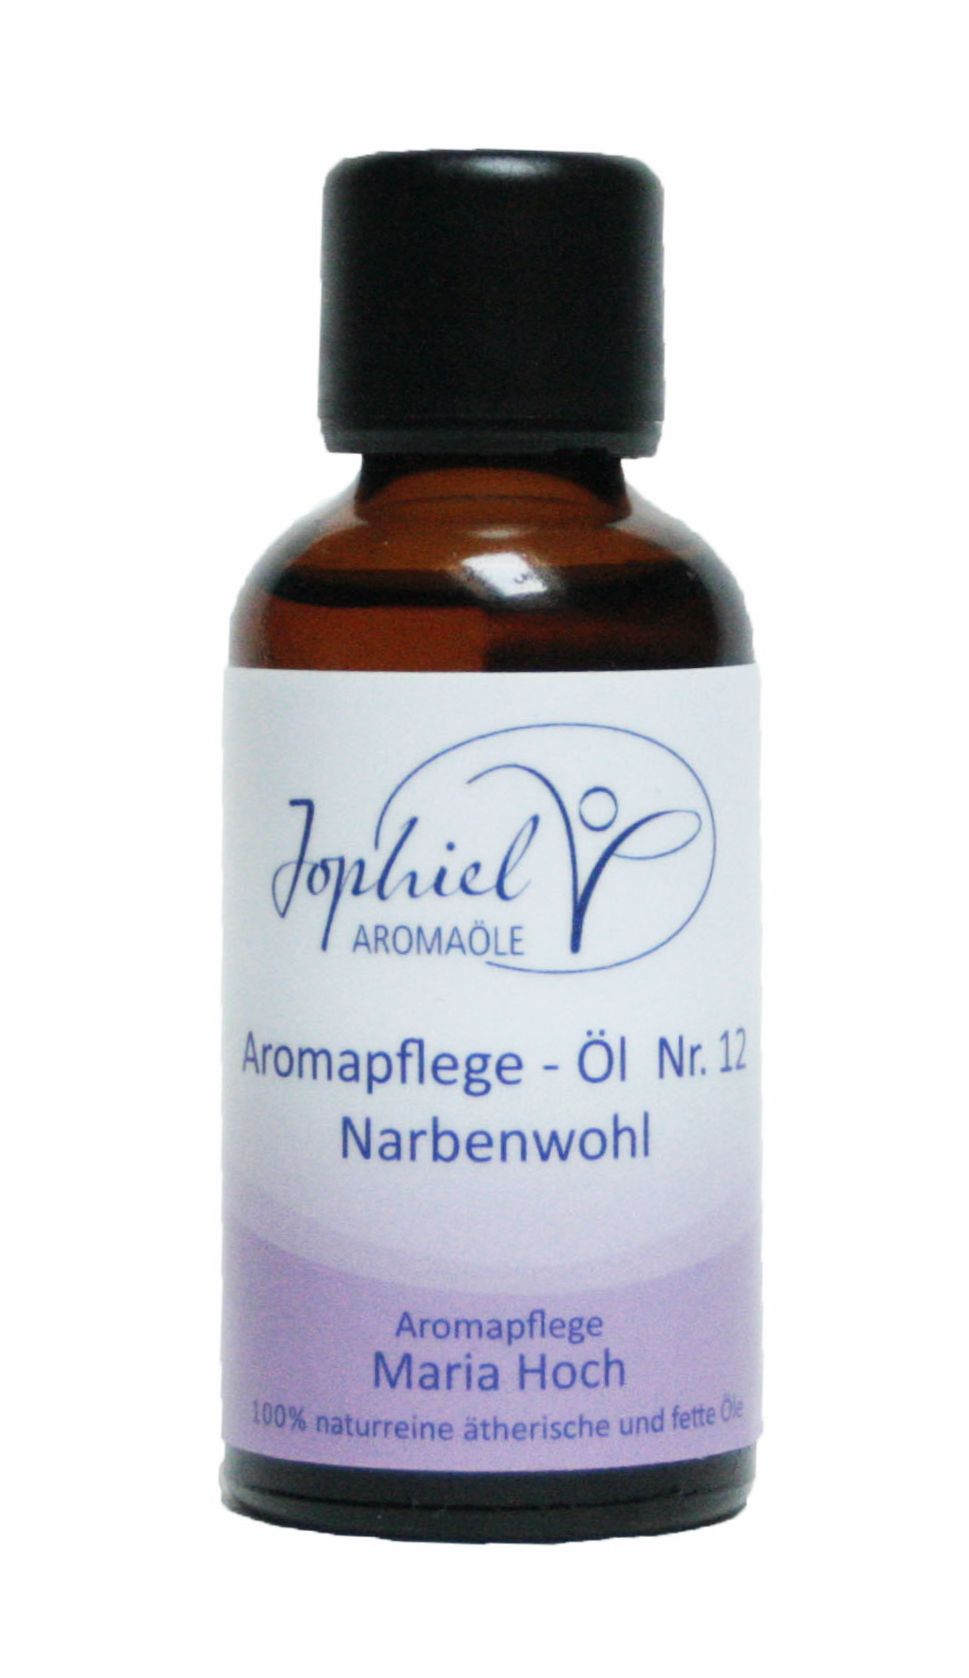 Aromapflege-Öl Nr. 12 Narbenwohl 50 ml  Bio